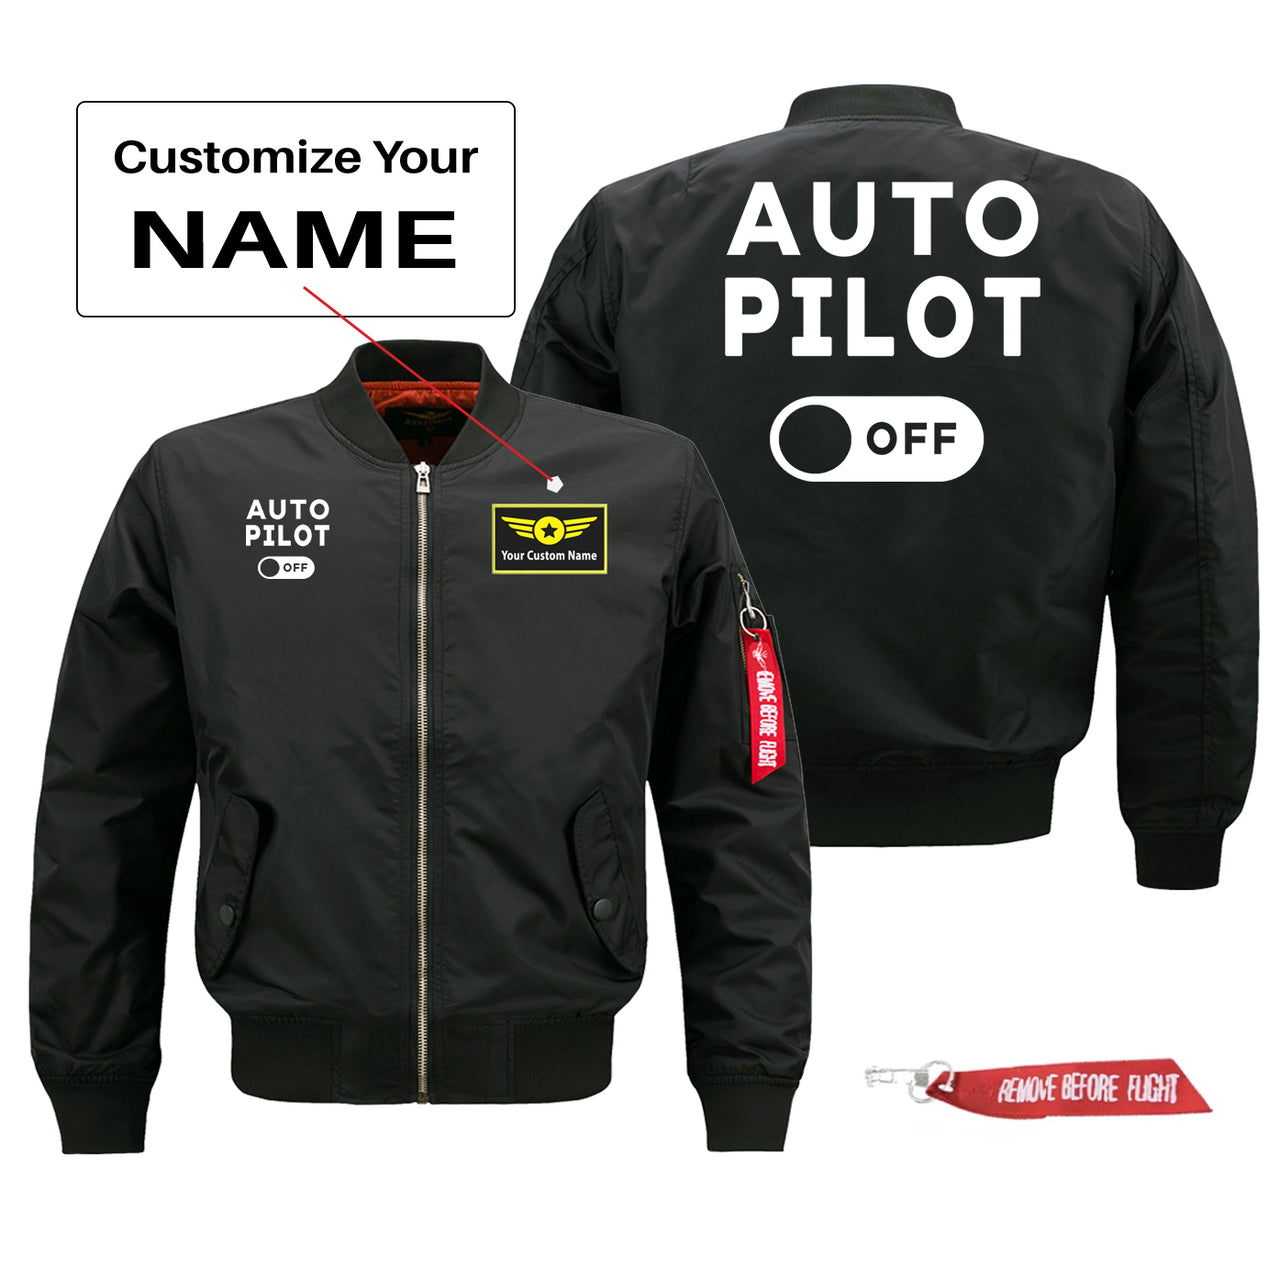 Auto Pilot Off Designed Pilot Jackets (Customizable)